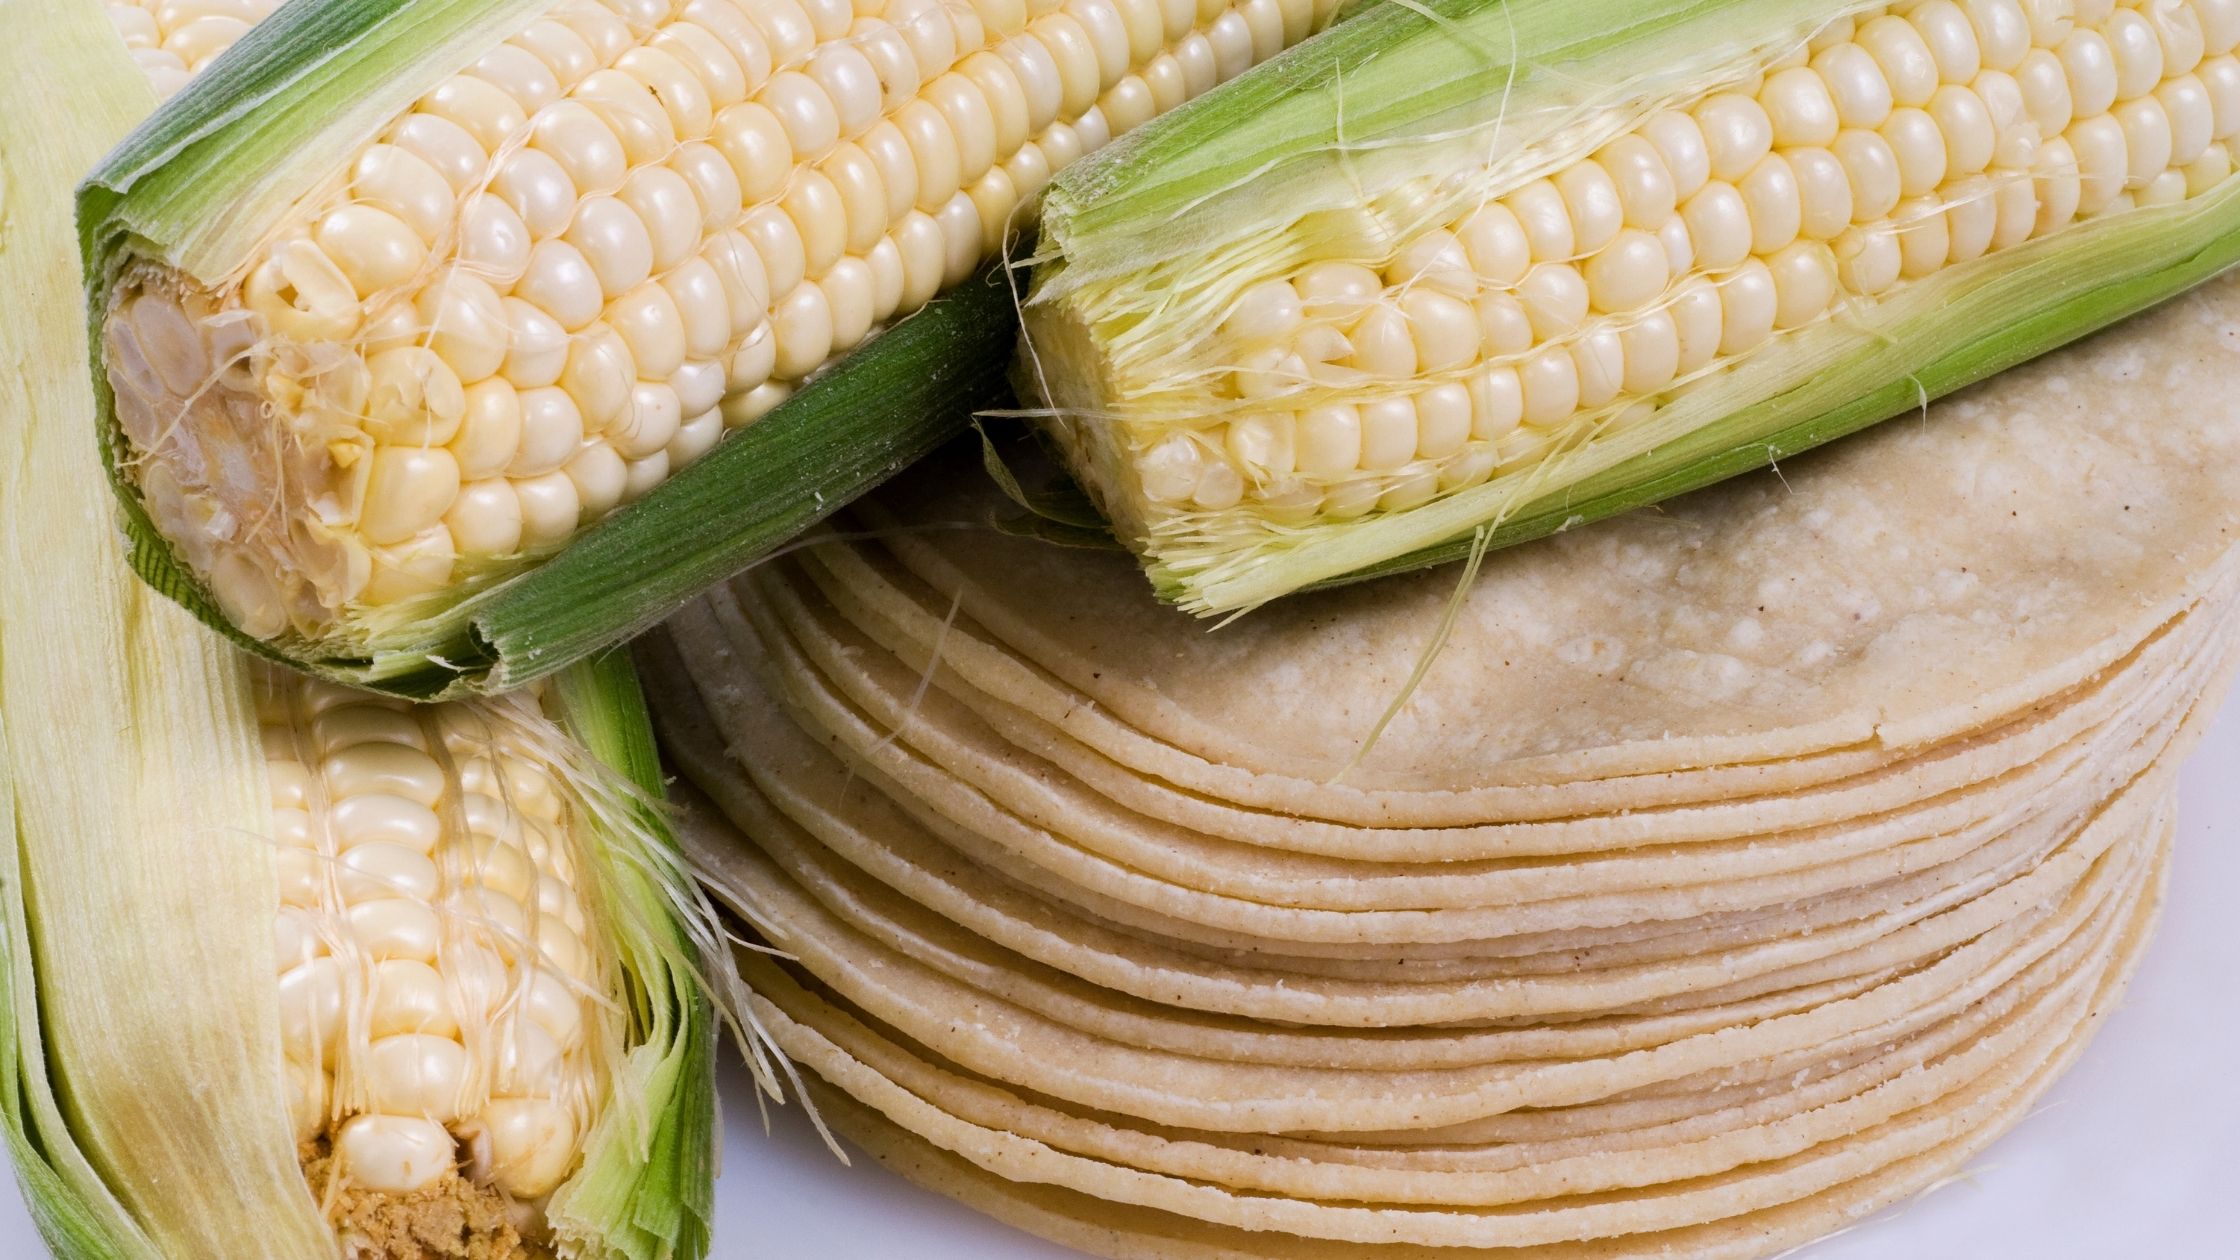 Can diabetics eat corn tortillas